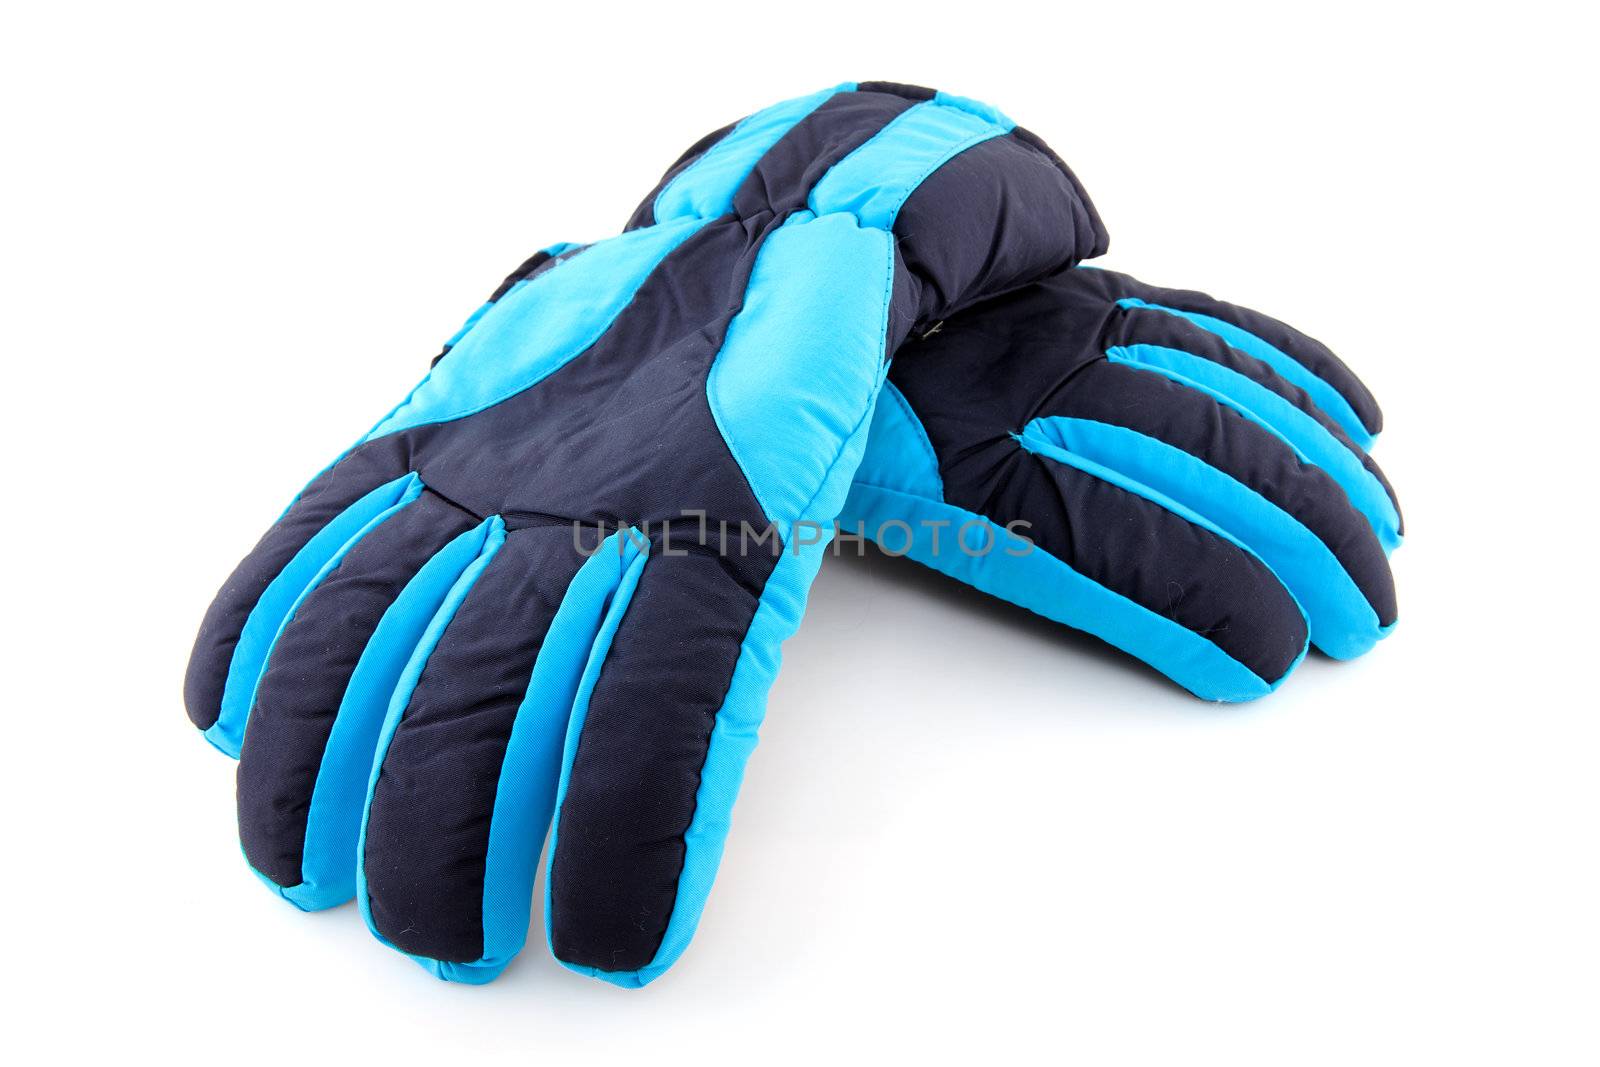 pair of blu ski gloves isolated on white background